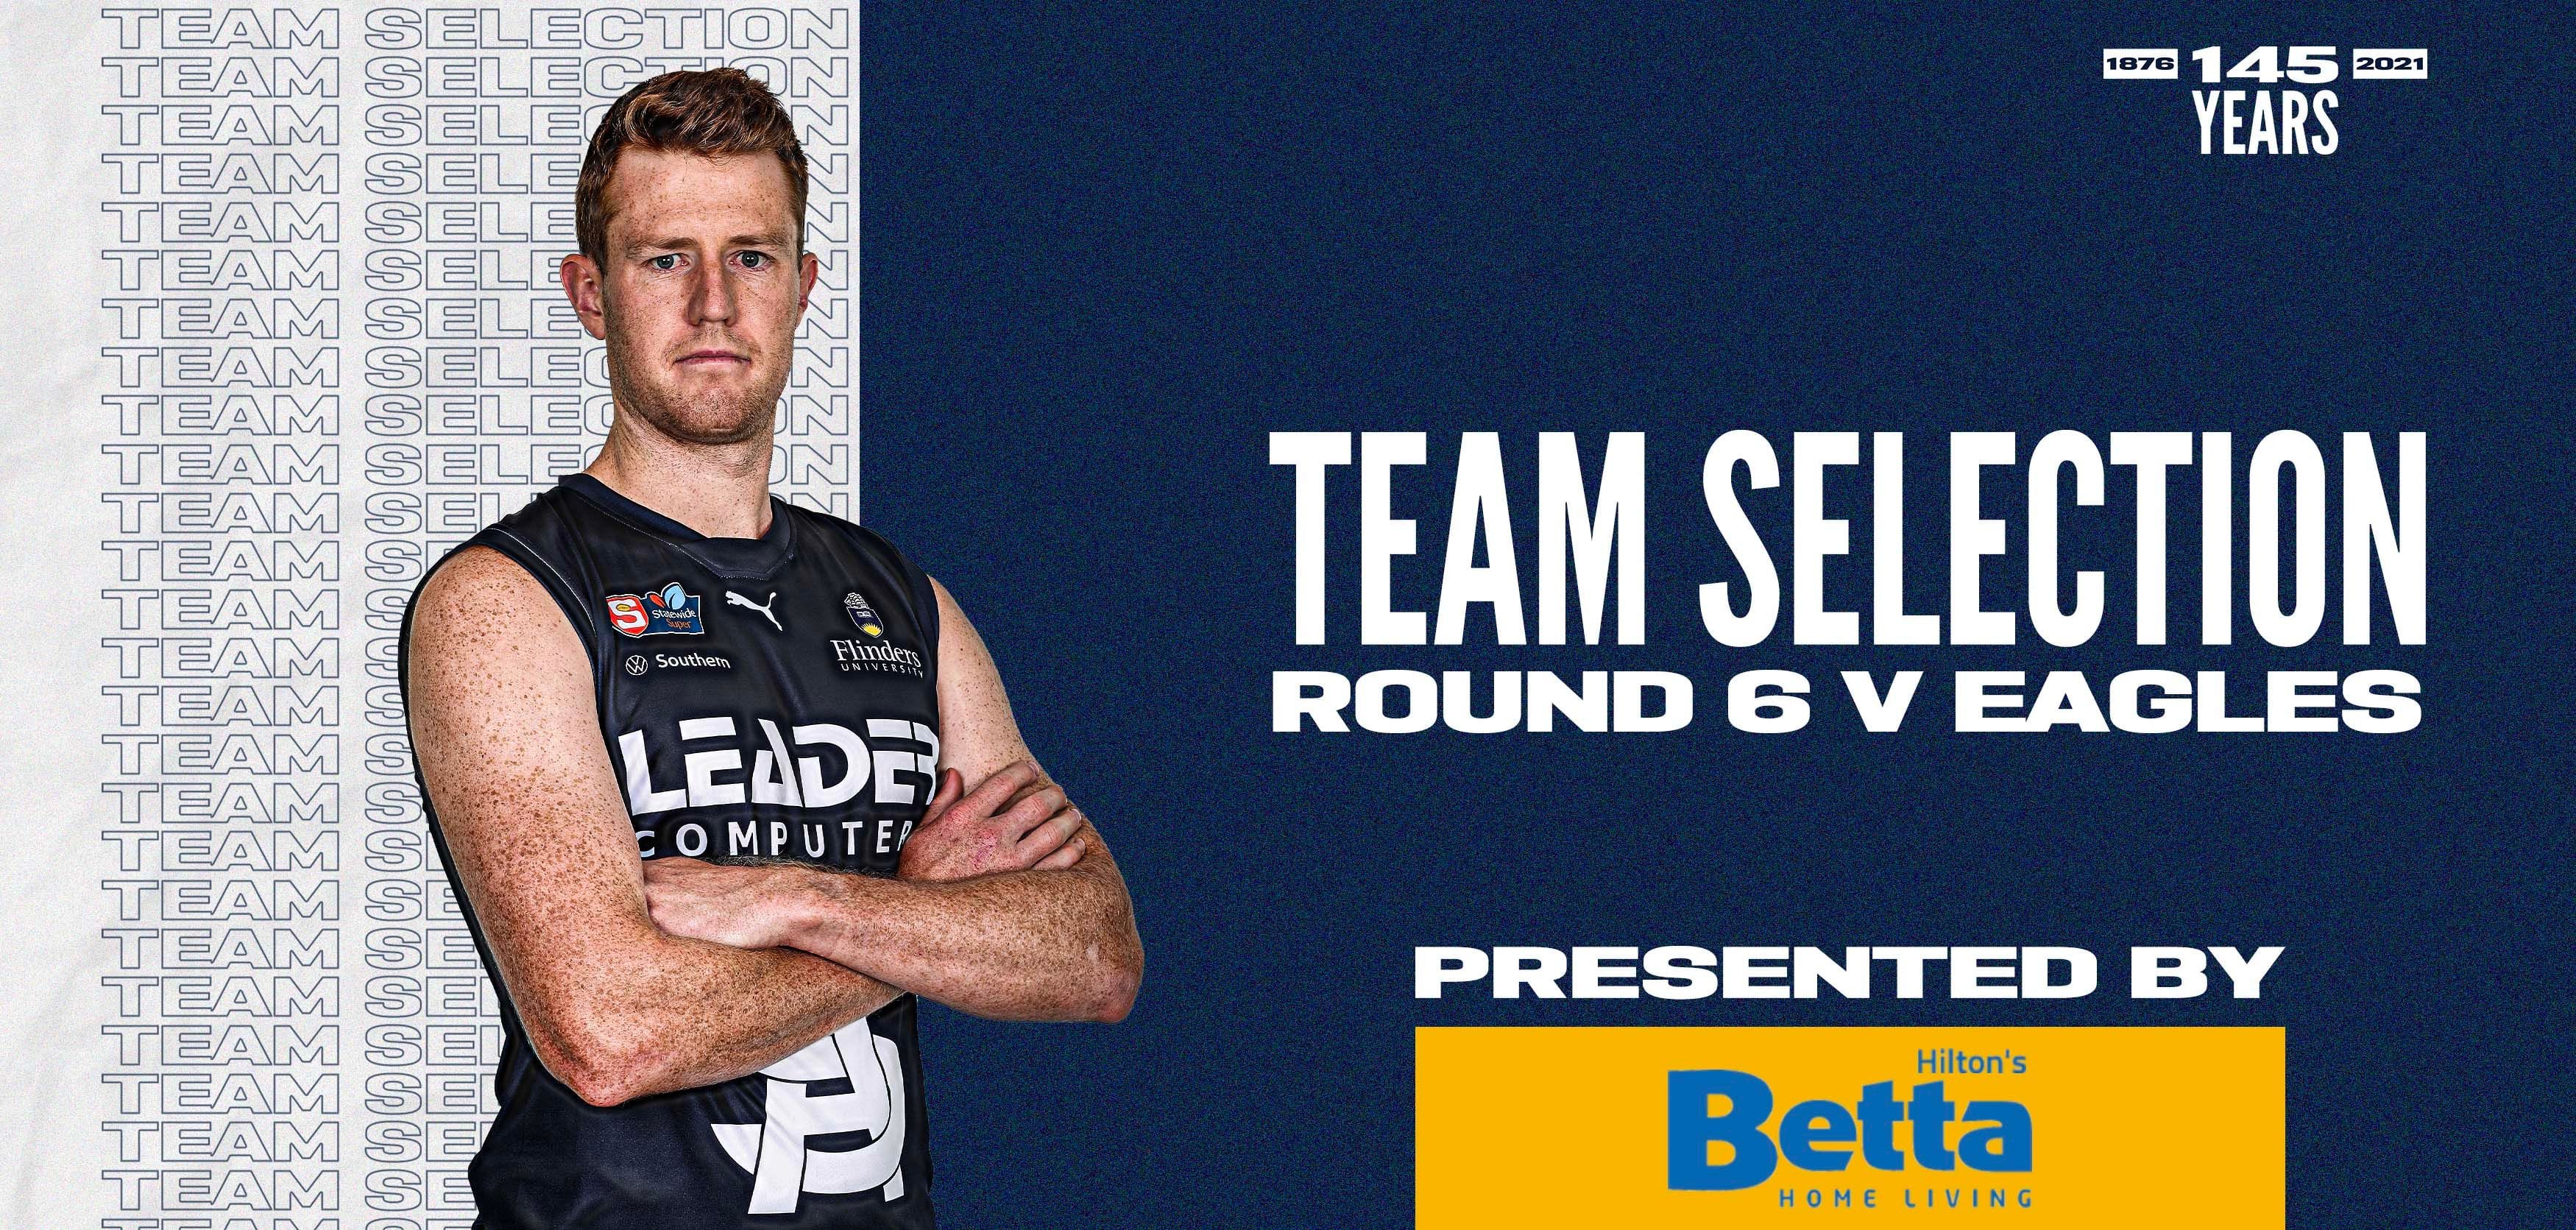 BETTA Teams Selection: Round 6 @ Eagles